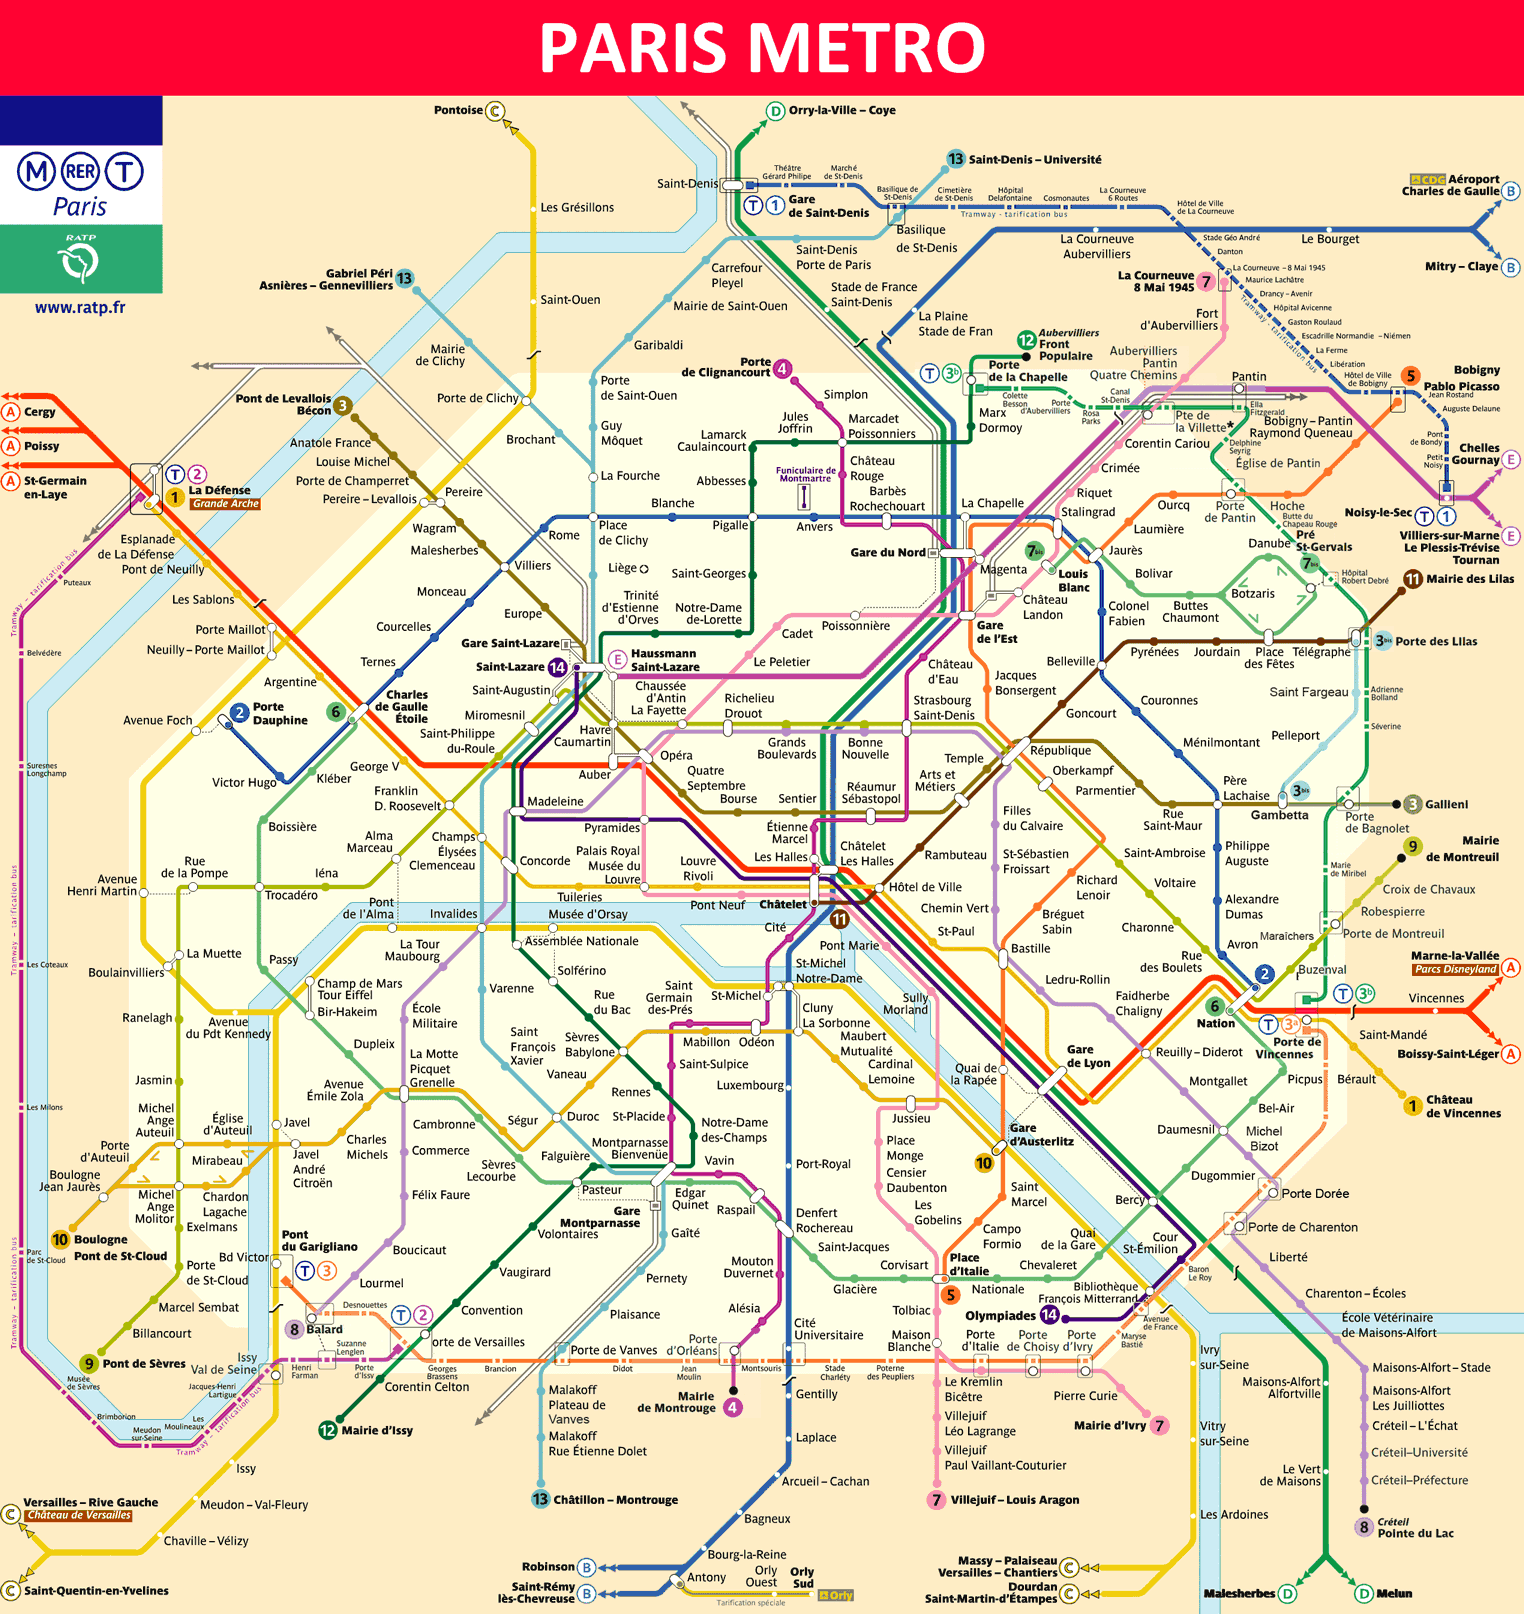 Paris Metro - Maps, Timetables, Tourist Information